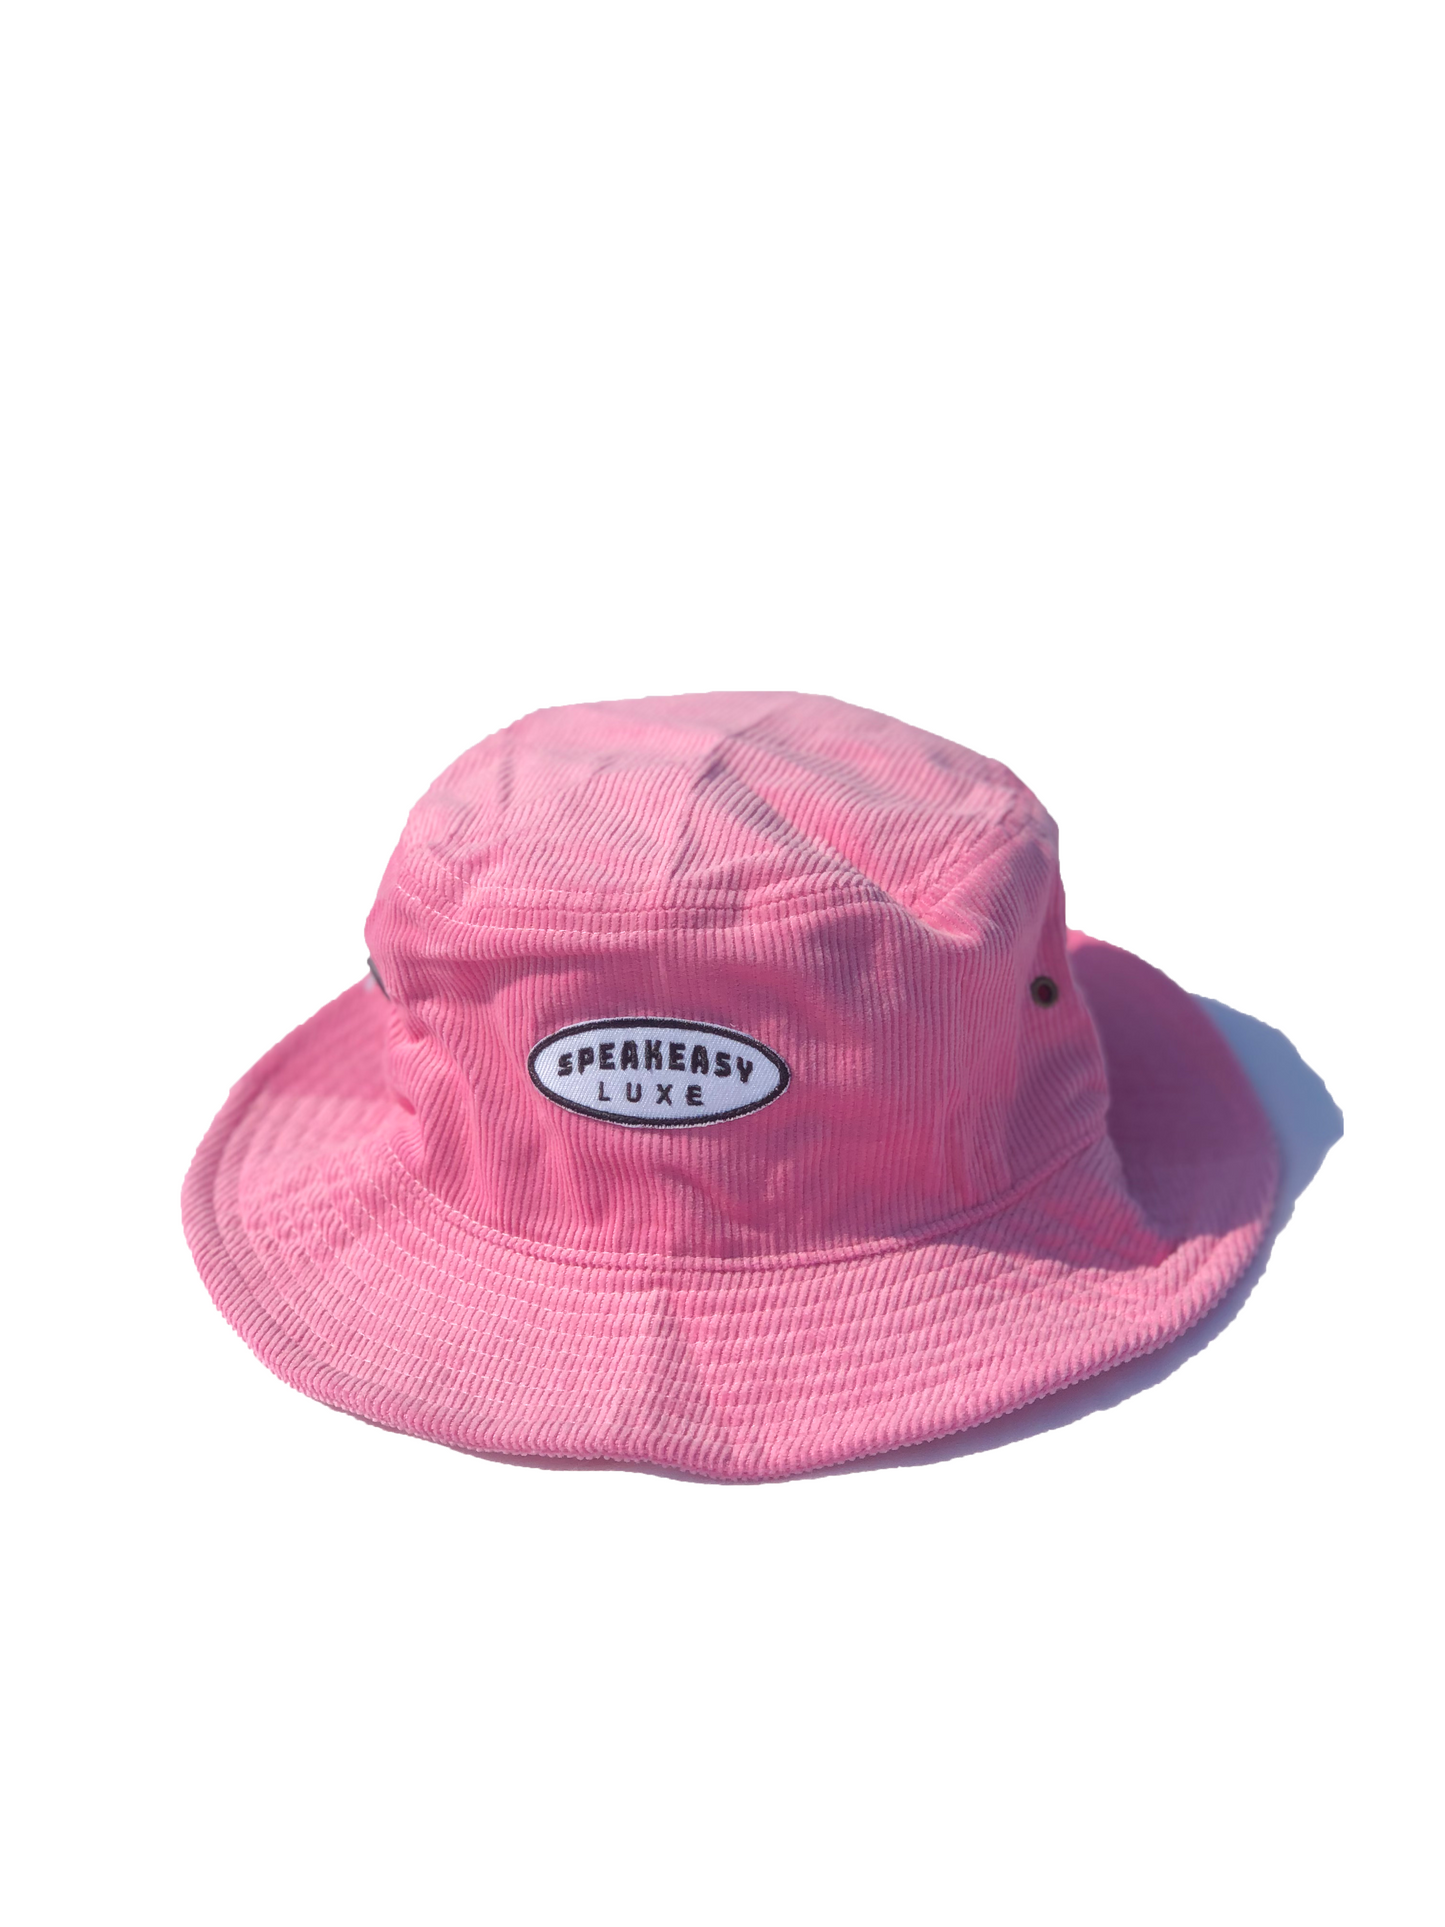 Corduroy Bucket Hat - Pink w/ Handsewn Patch